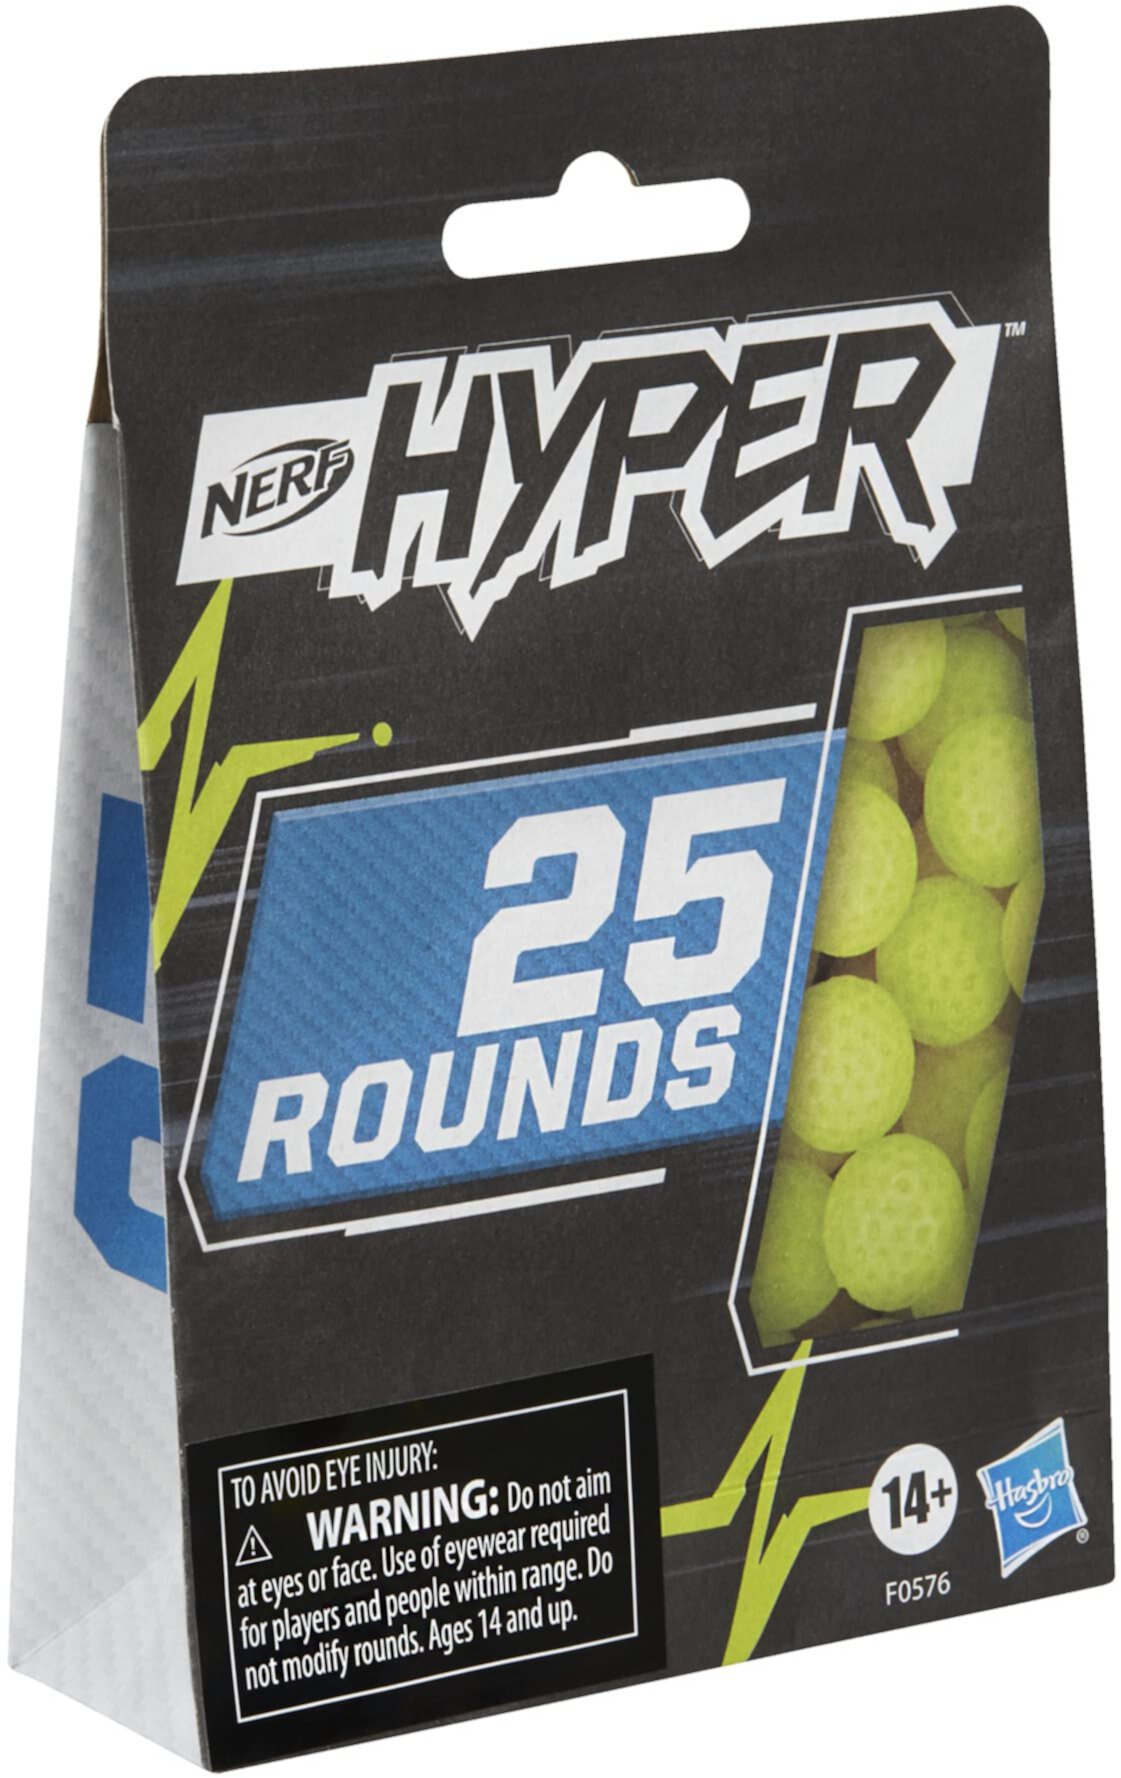 NERF Hyper 25-Round Boost Refill, включает 25 Hyper-раундов, для использования Hyper Blasters, запаситесь Hyper Games Nerf